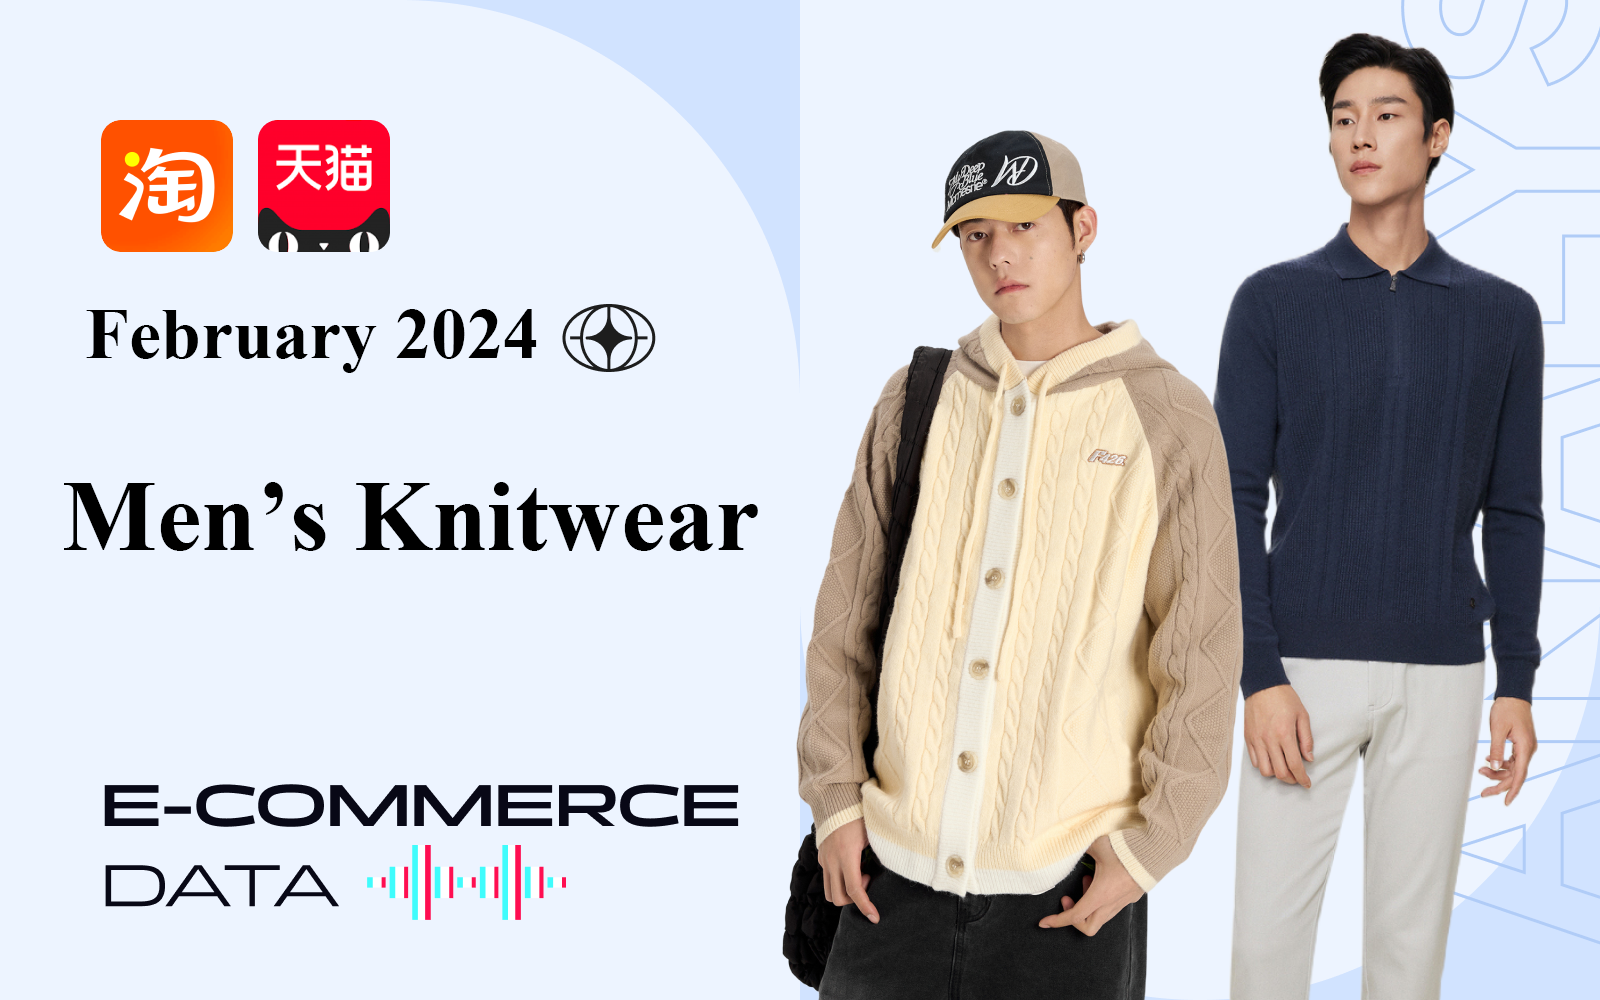 Knitwear -- The Data Analysis of E-Commerce Men's Knitwear in February